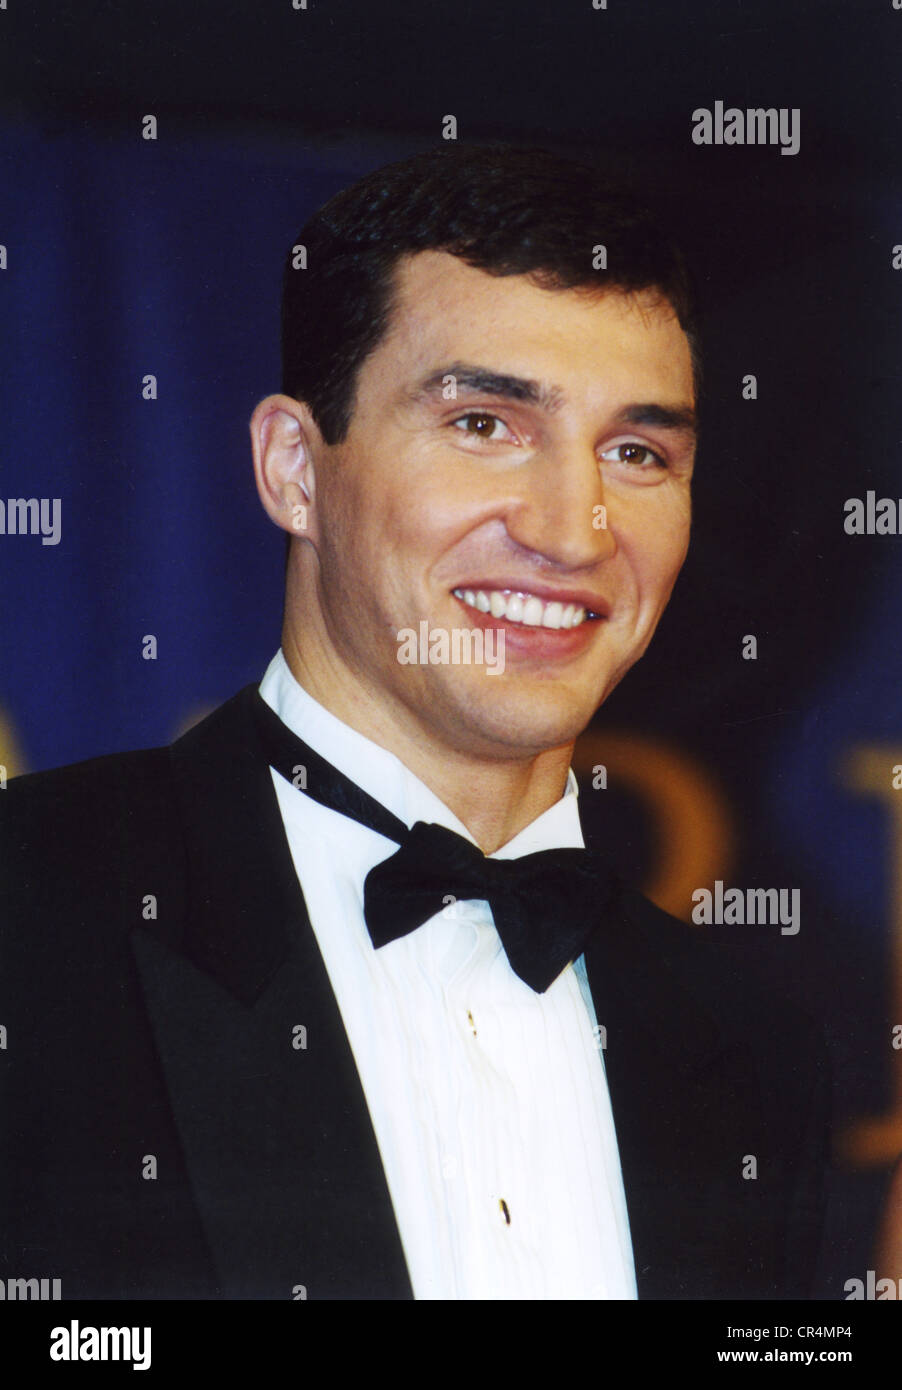 Klitschko, Wladimir, * 25.3.1976, Ukrainian boxer, portrait, at the Bambi Awards, 2000, Estrel Convention Center, Berlin, Stock Photo